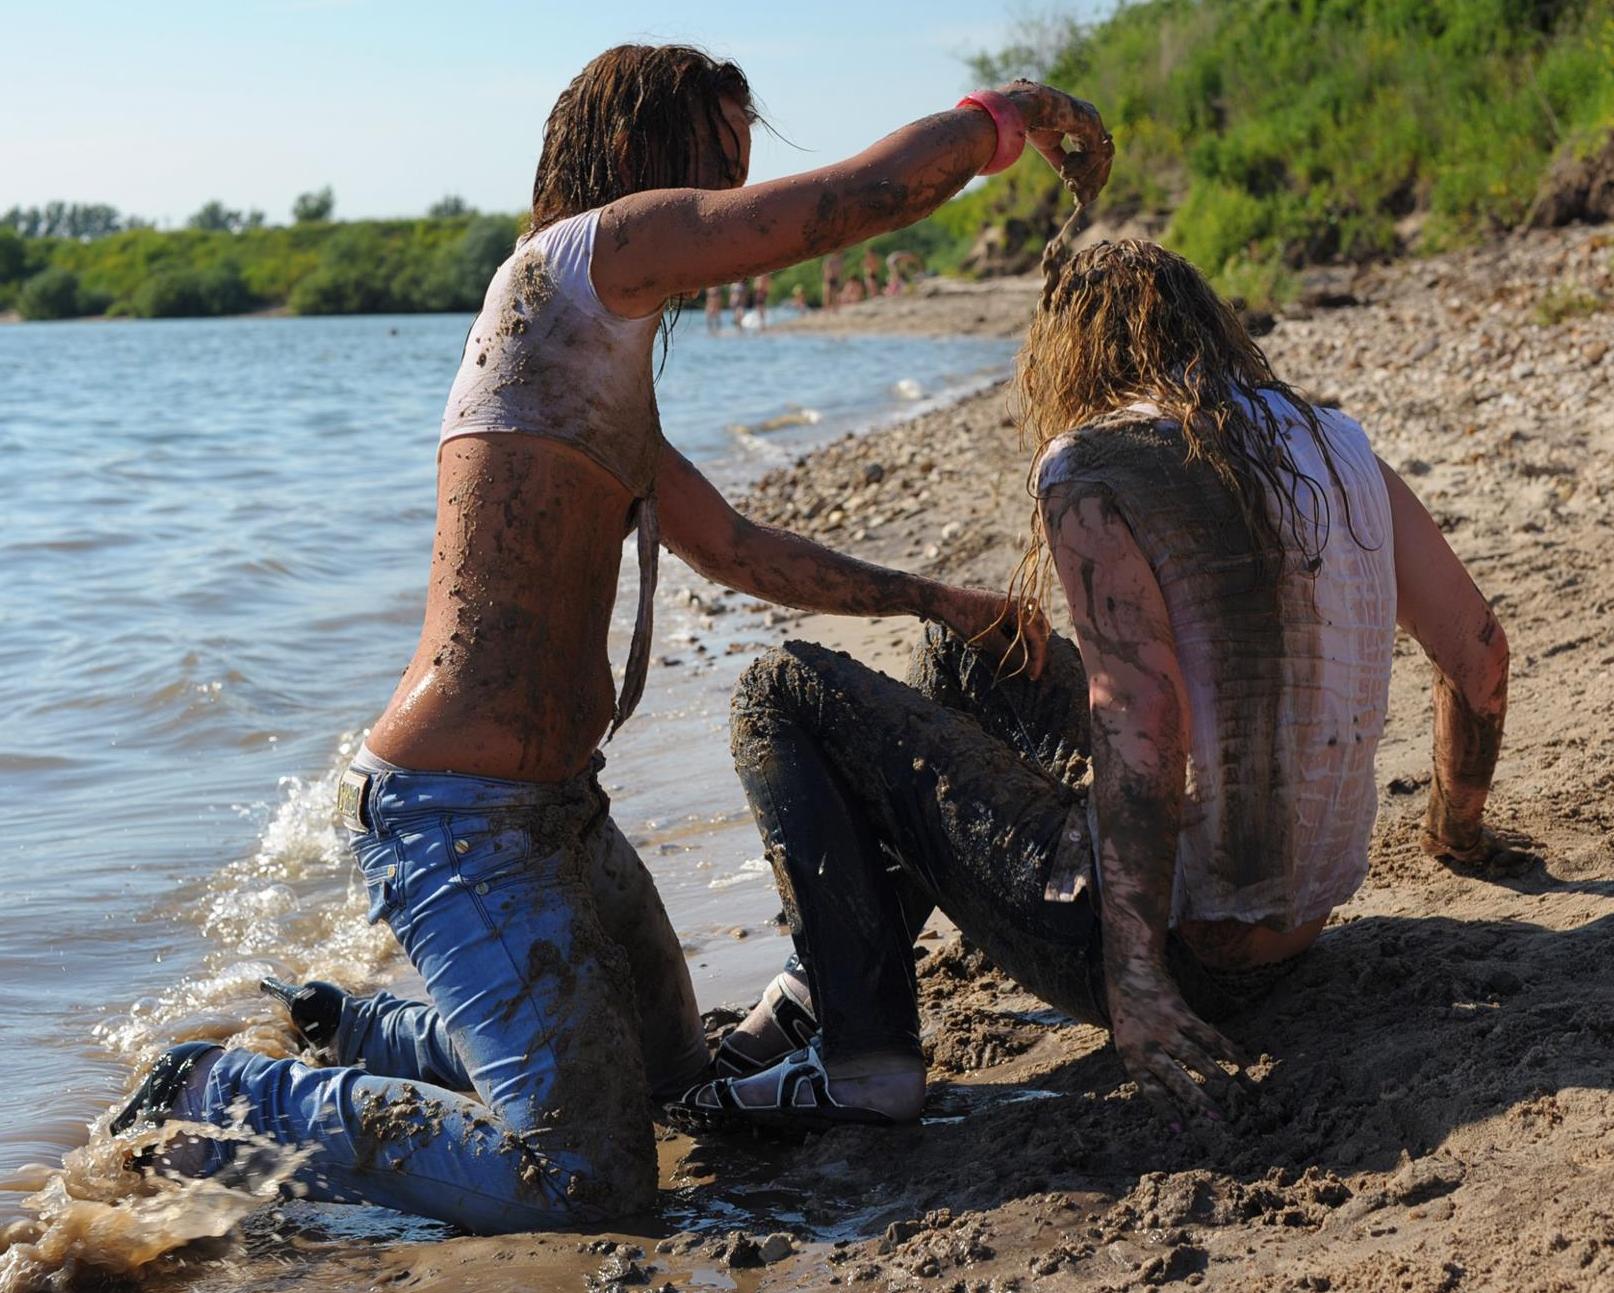 Messy Girls wearing Muddy Blue Denim Jeans and Muddy White Tee-Shirts